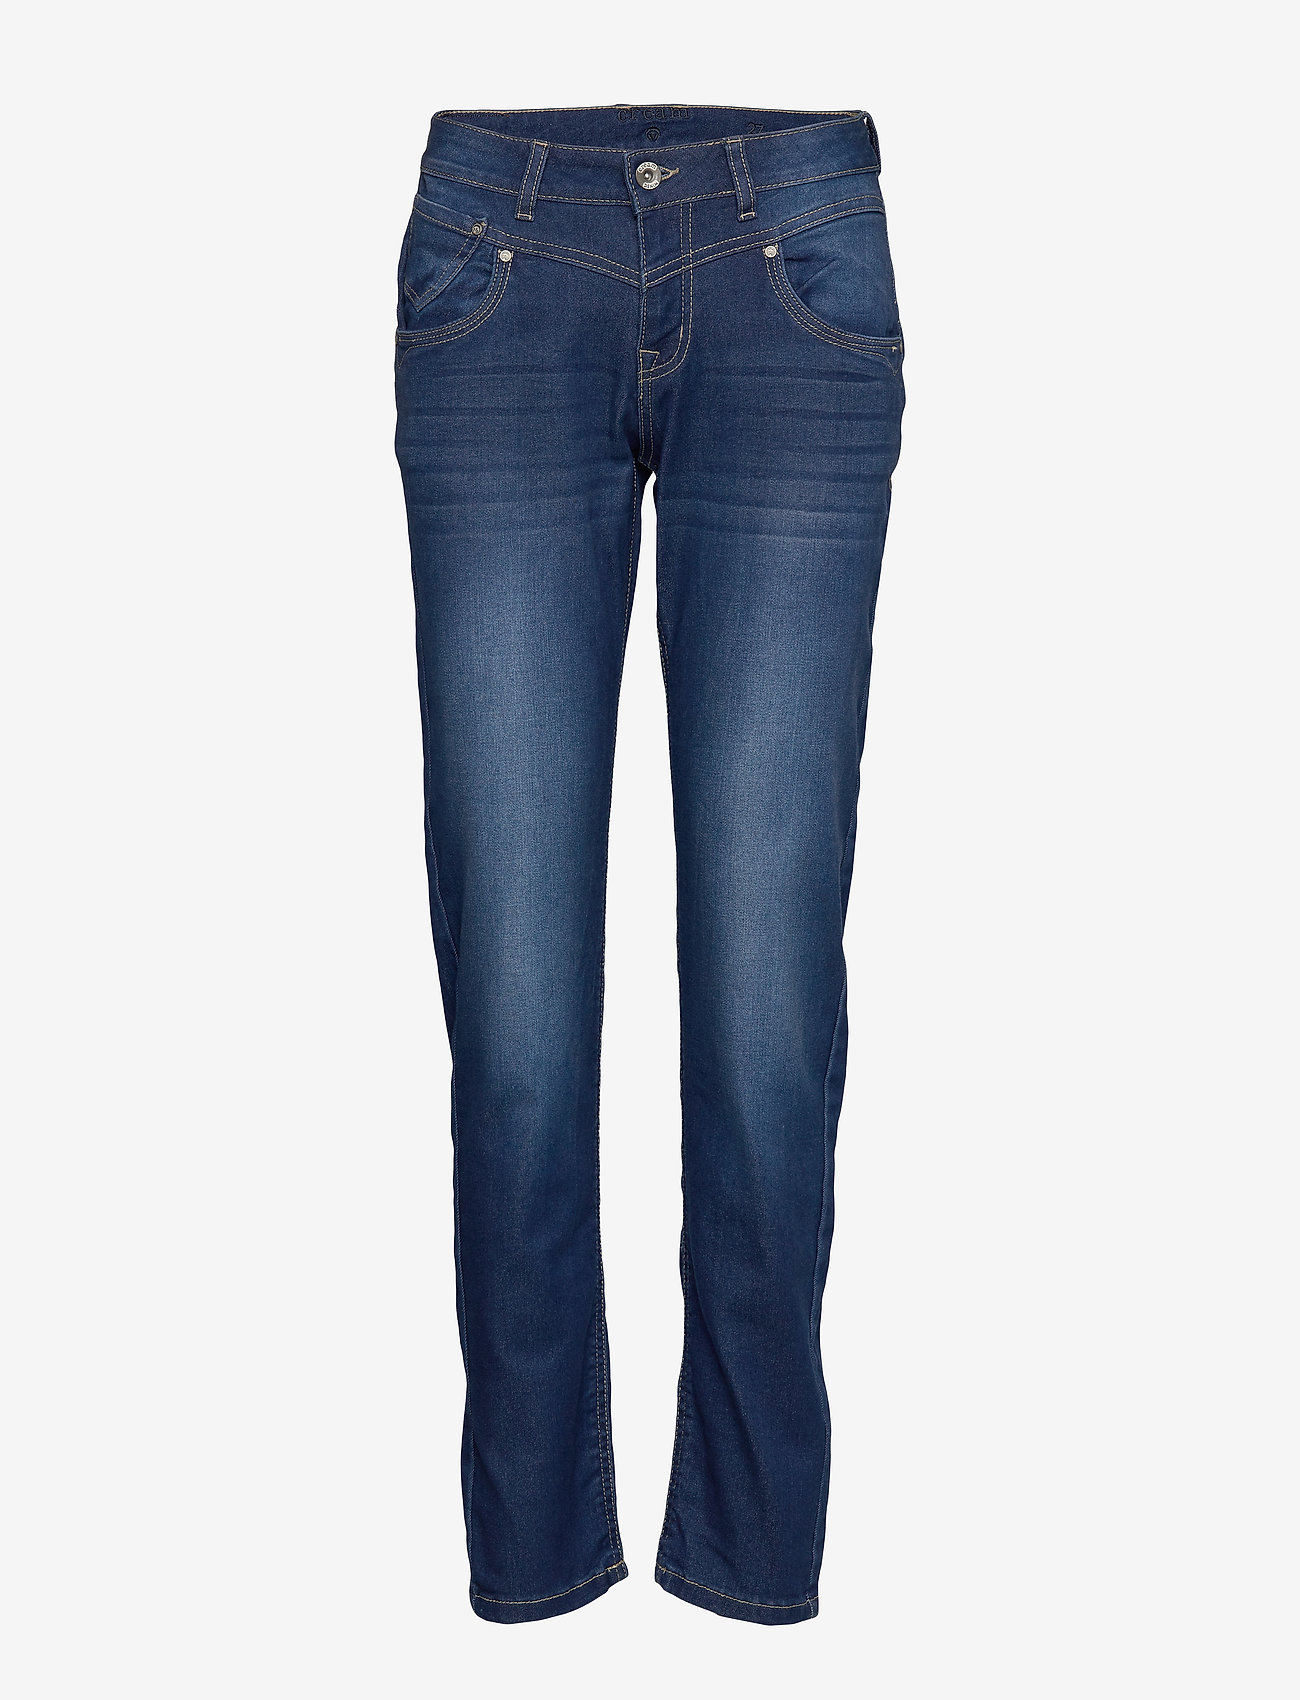 Kammacr Jeans - Coco Fit (Denim Blue) (45.47 €) - Cream - | Boozt.com